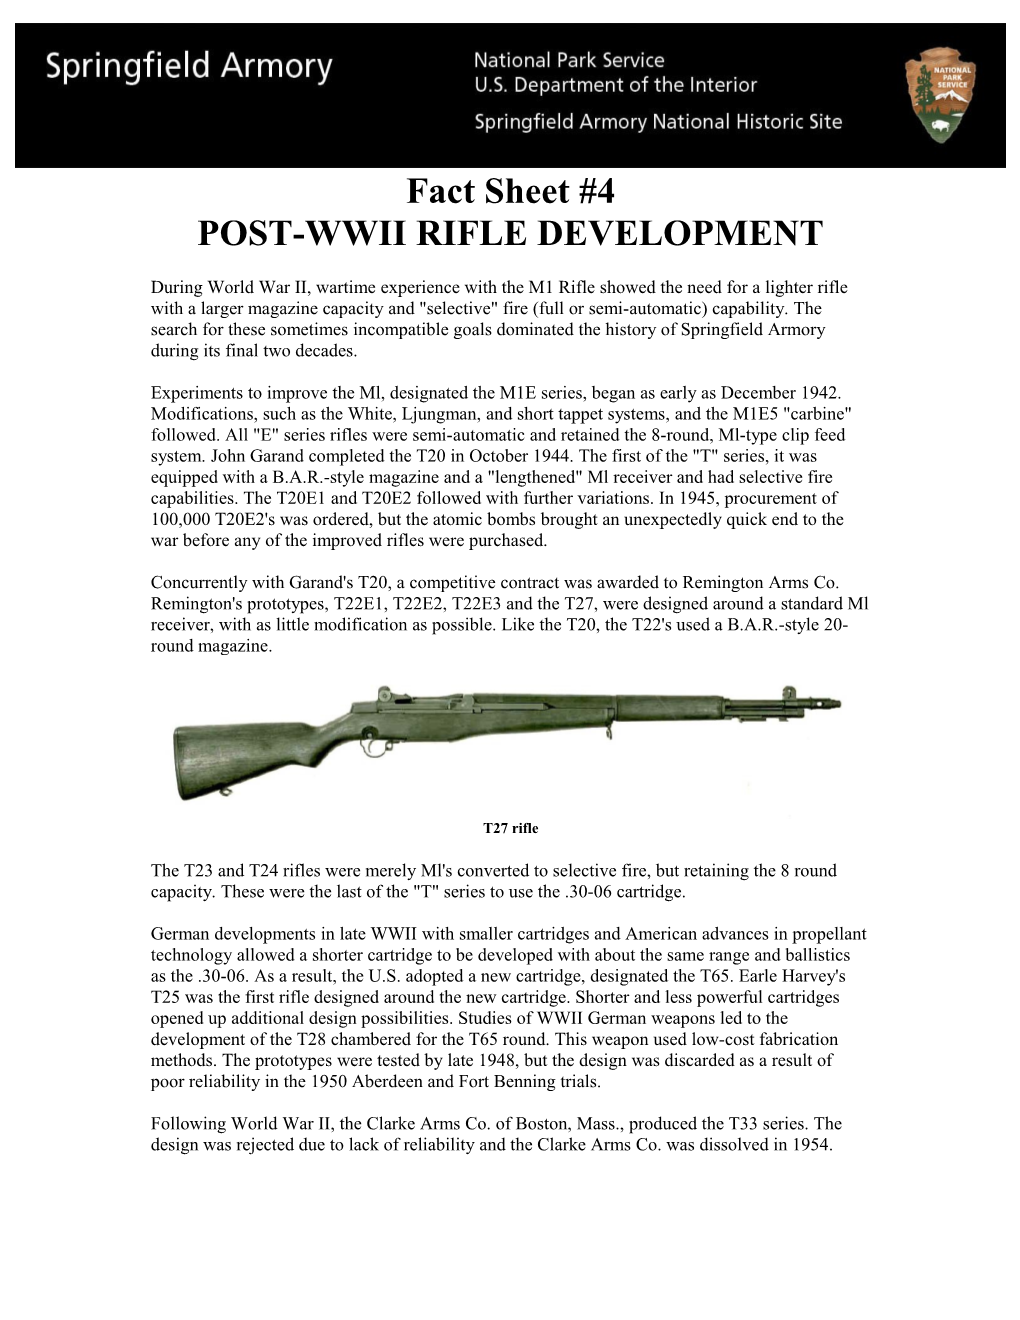 Post-Wwii Rifle Development